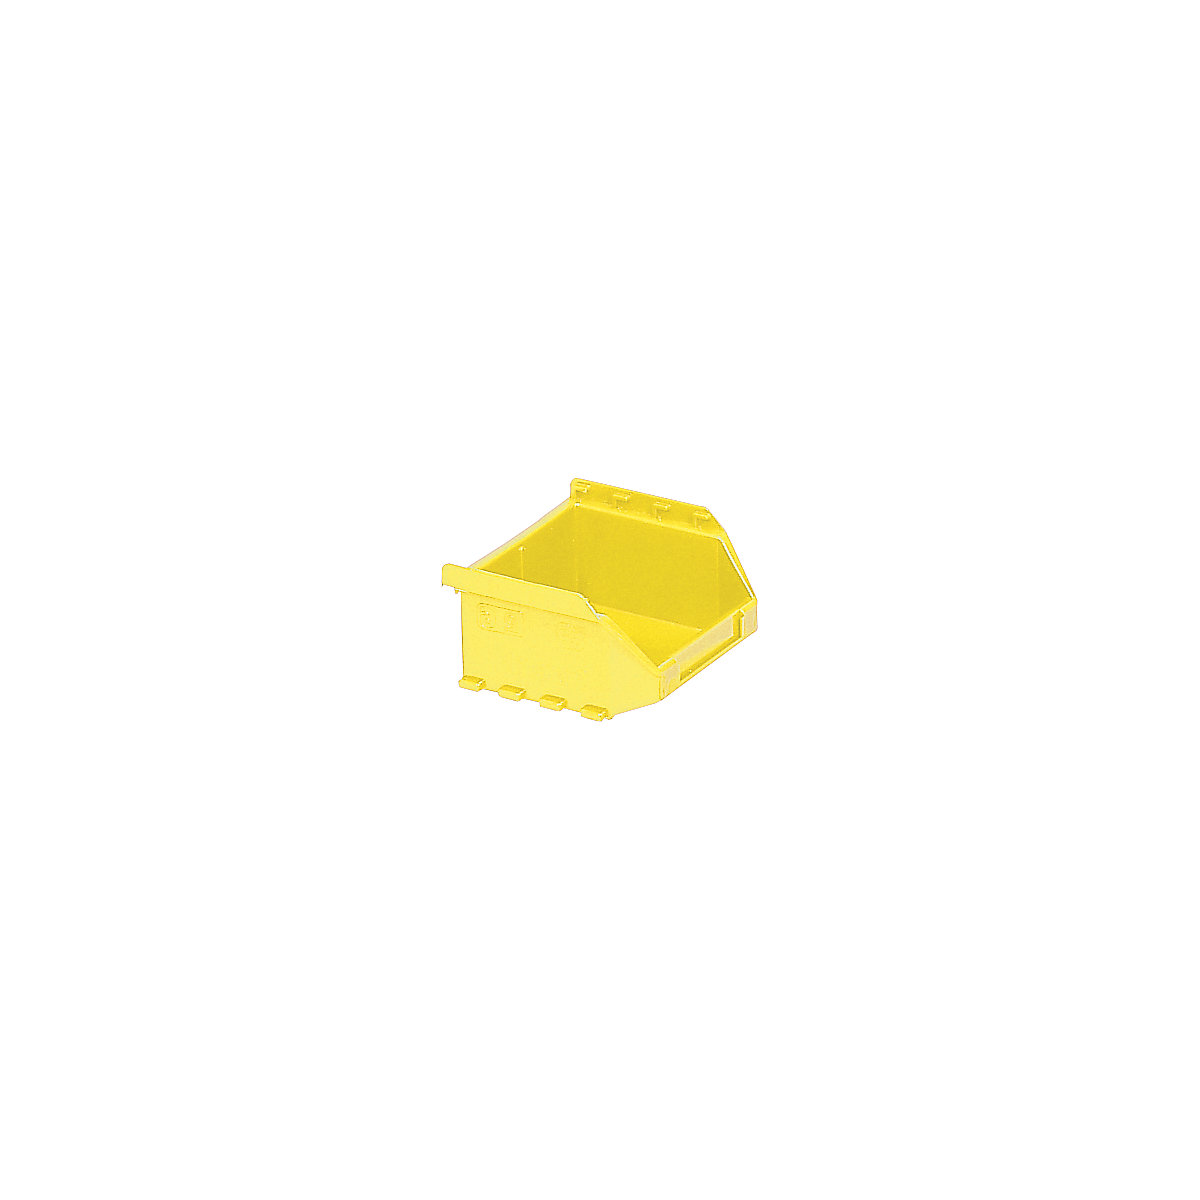 FUTURA-magazijnbak van polyethyleen, l x b x h = 85 x 98 x 50 mm, VE = 50 stuks, geel